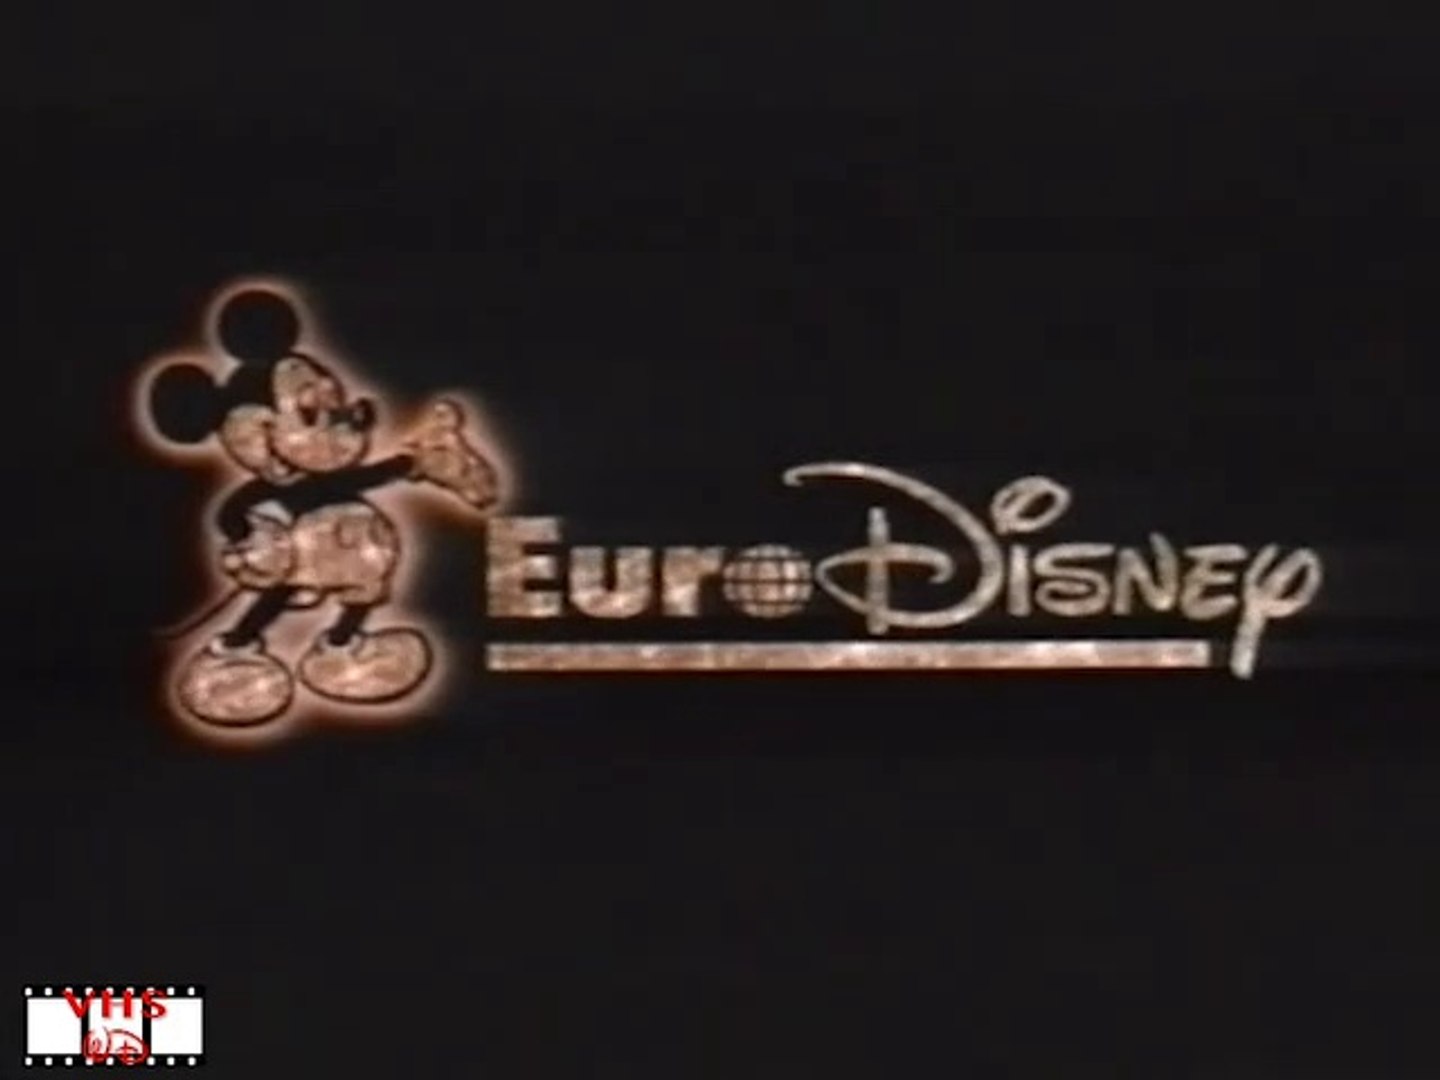 VHSWD PausaVideo - Promo Le più belle storie di Natale di Walt Disney -  Video Dailymotion